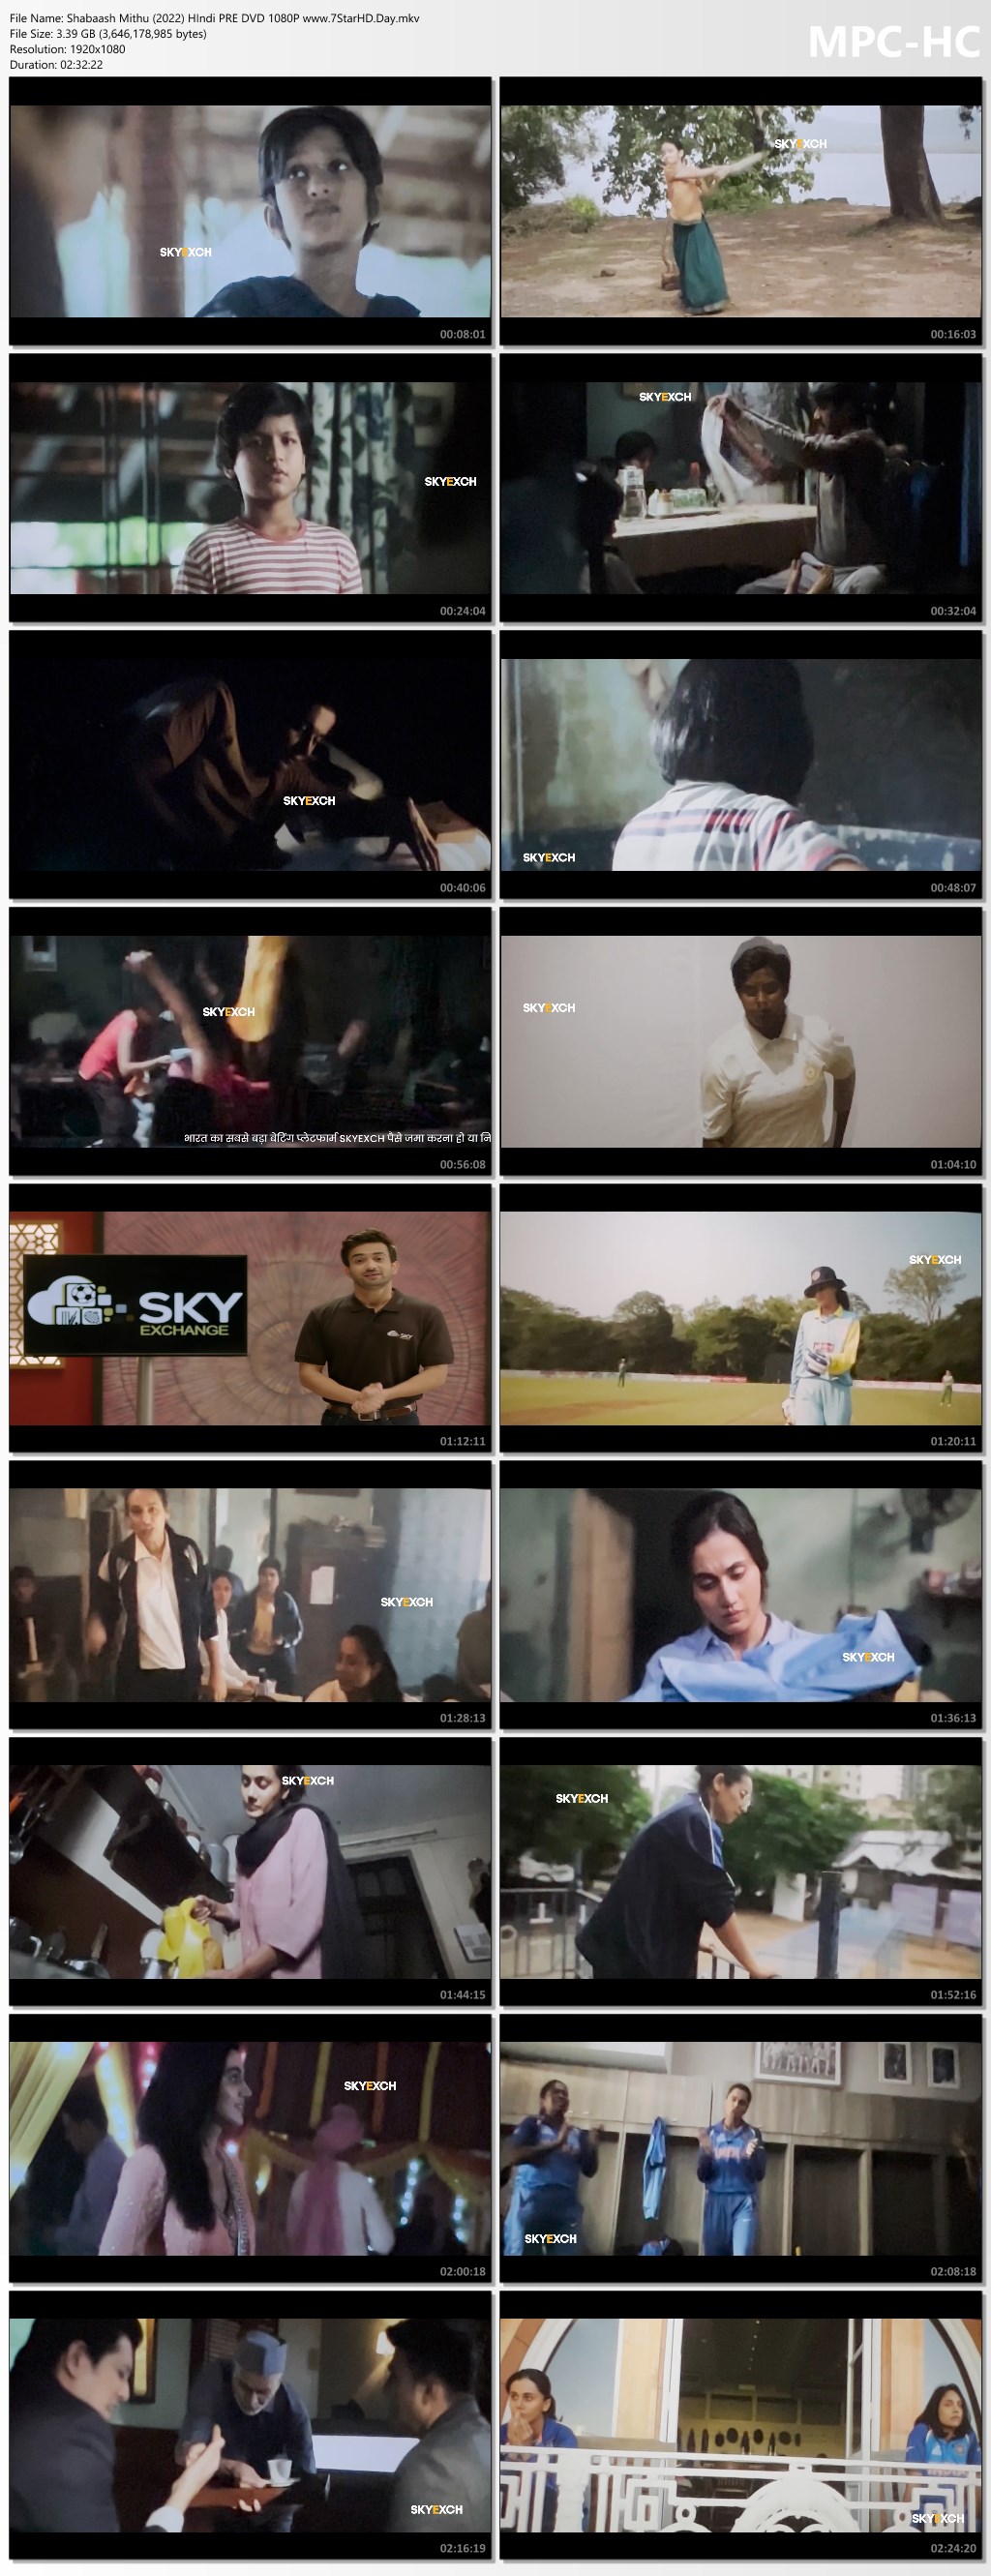 Shabaash Mithu 2022 Hindi Movie 400MB Pre-DVDRip 480p Download